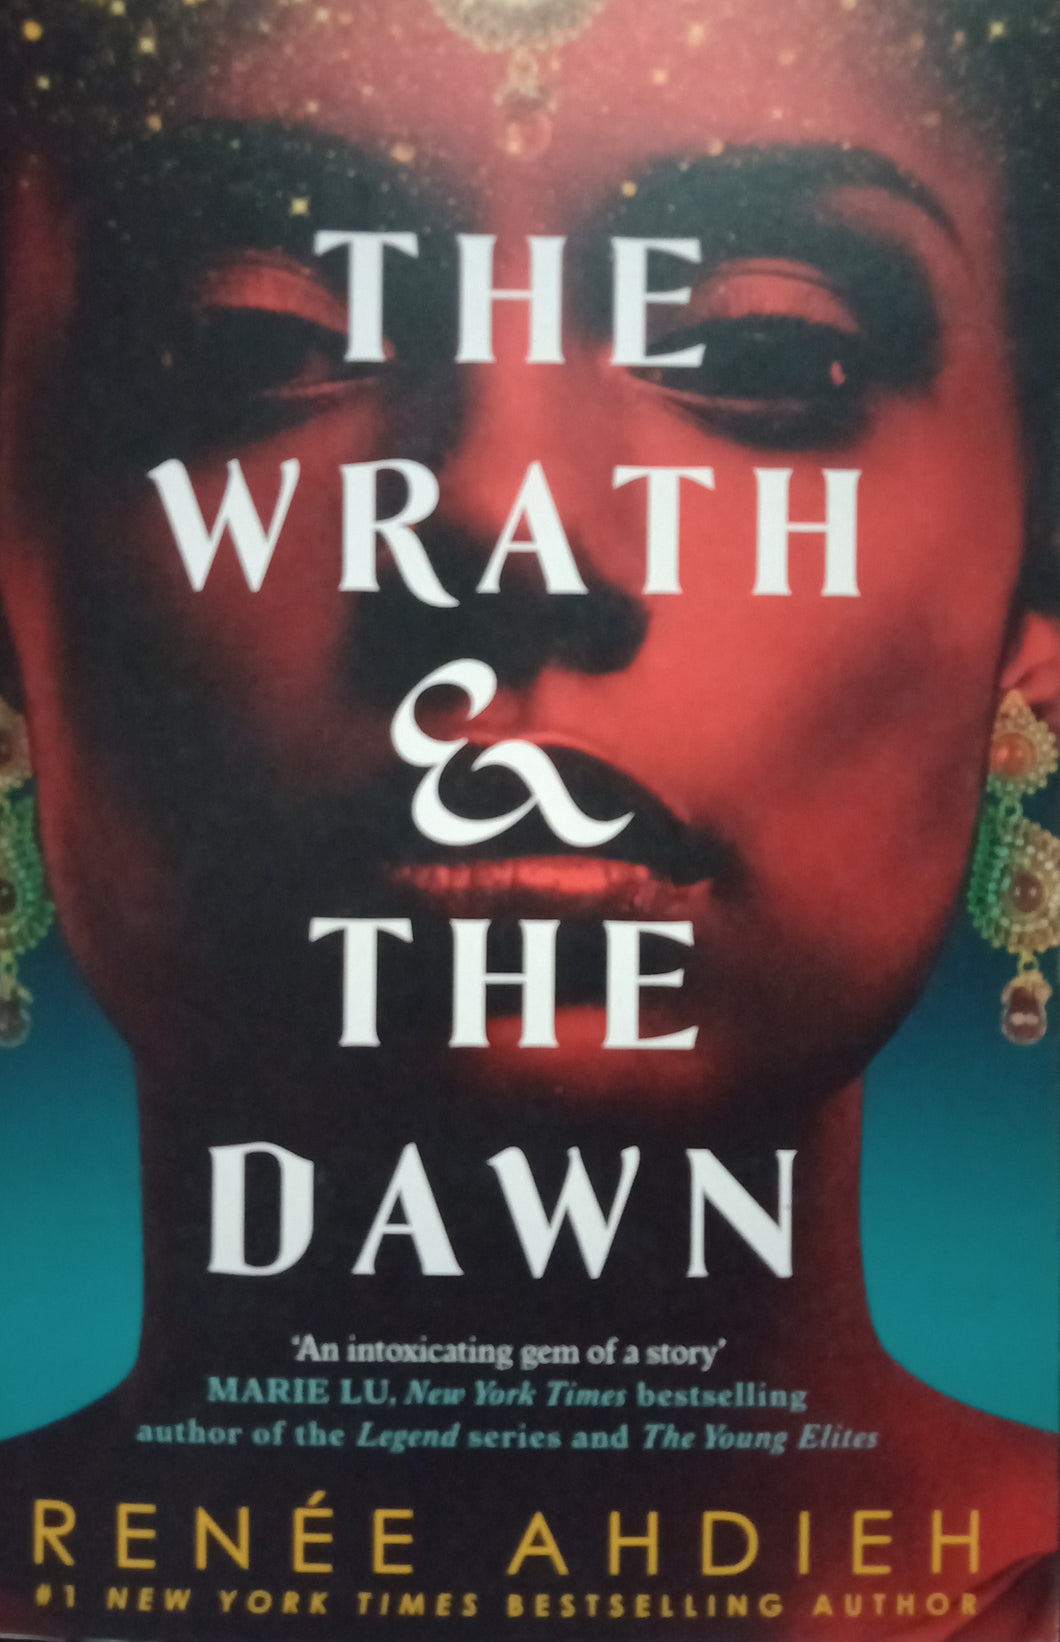 The Wrath & The Dawn by Renee Ahdieh